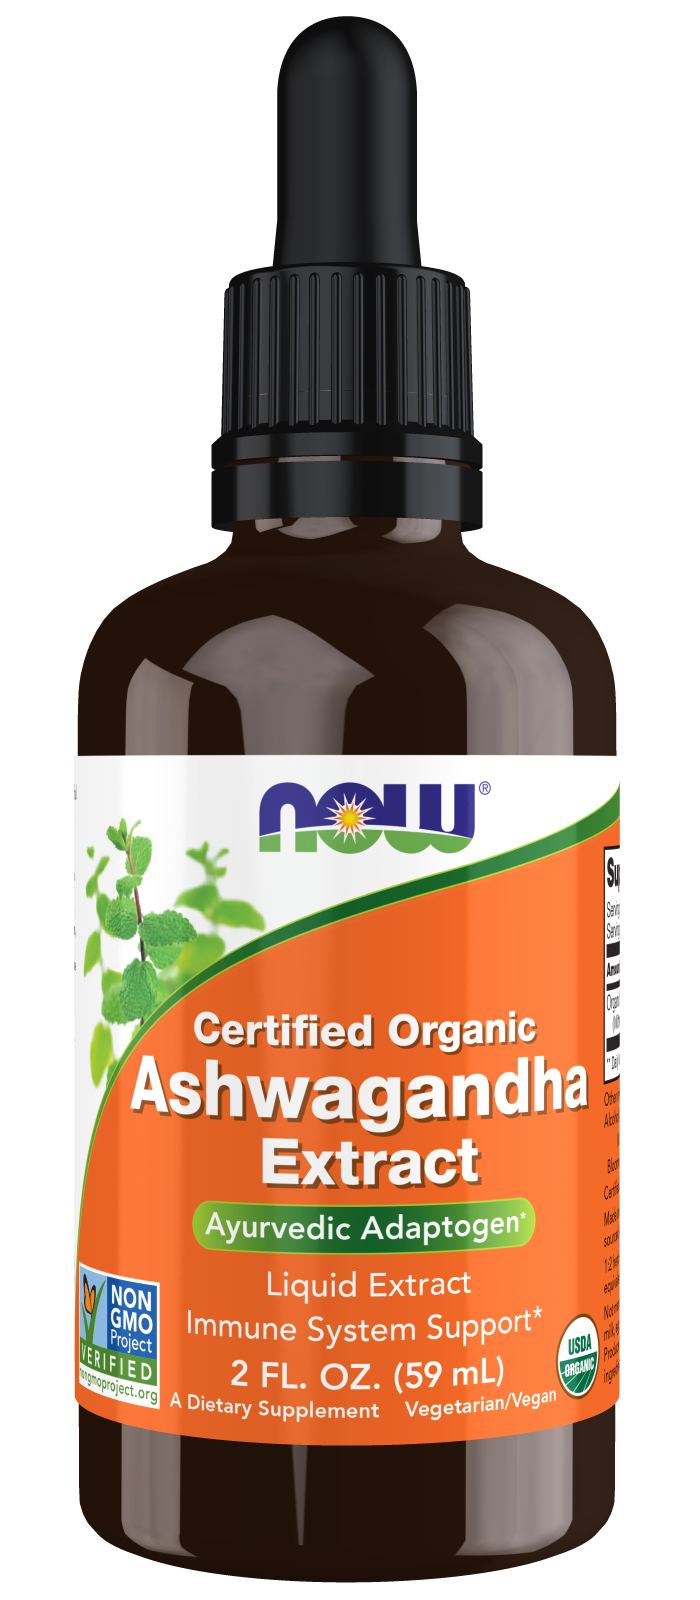 Ashwagandha Extract Liquid, Organic - 2 fl. oz. bottle front